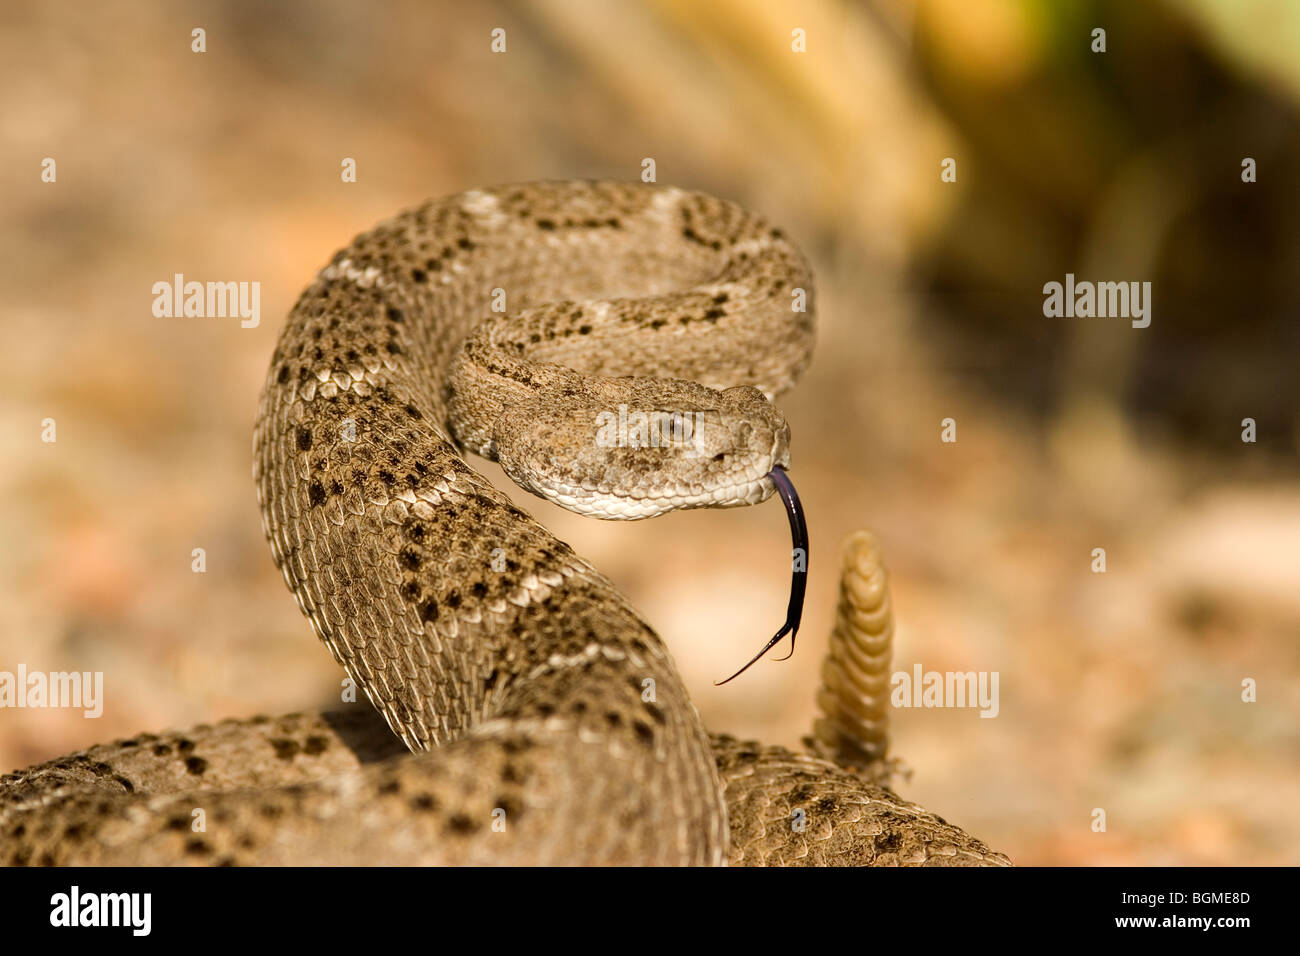 Western Diamondback rattlesnake Stock Photo